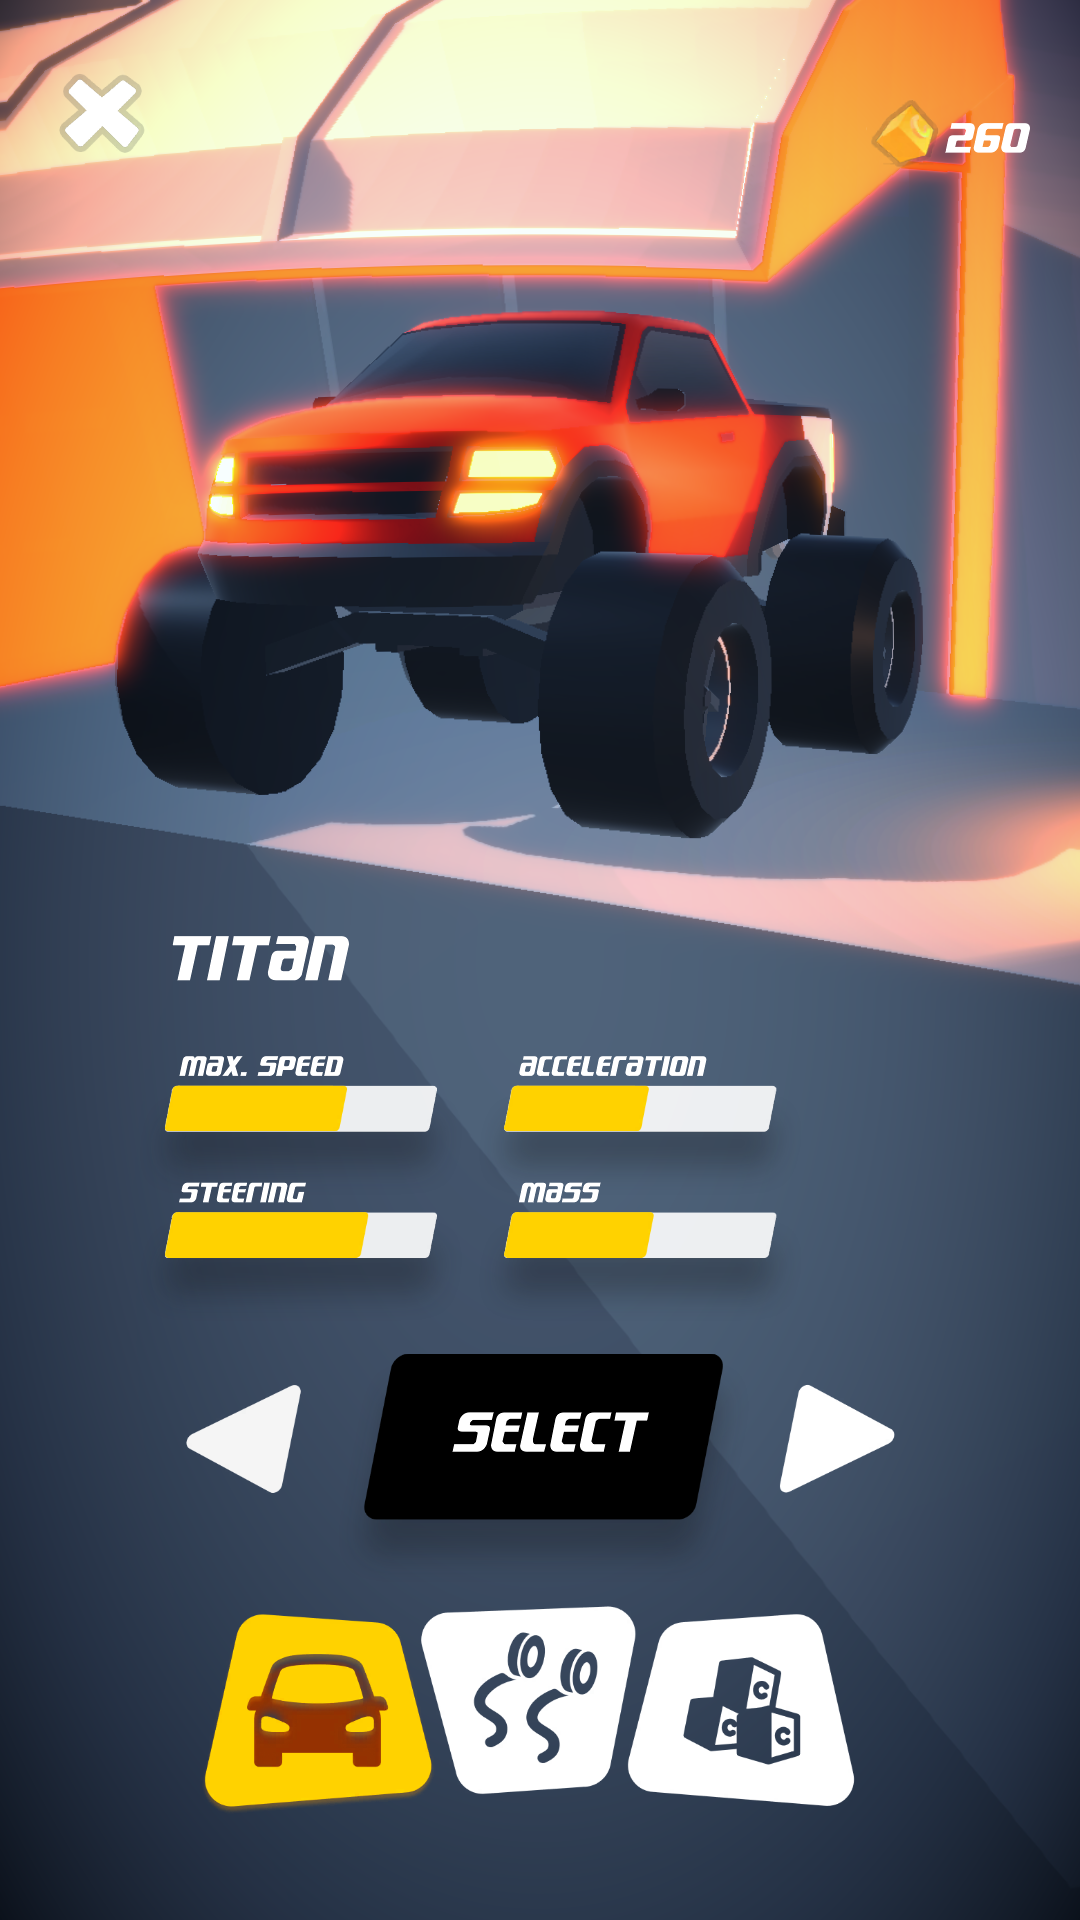 Sunset Driver screenshot game